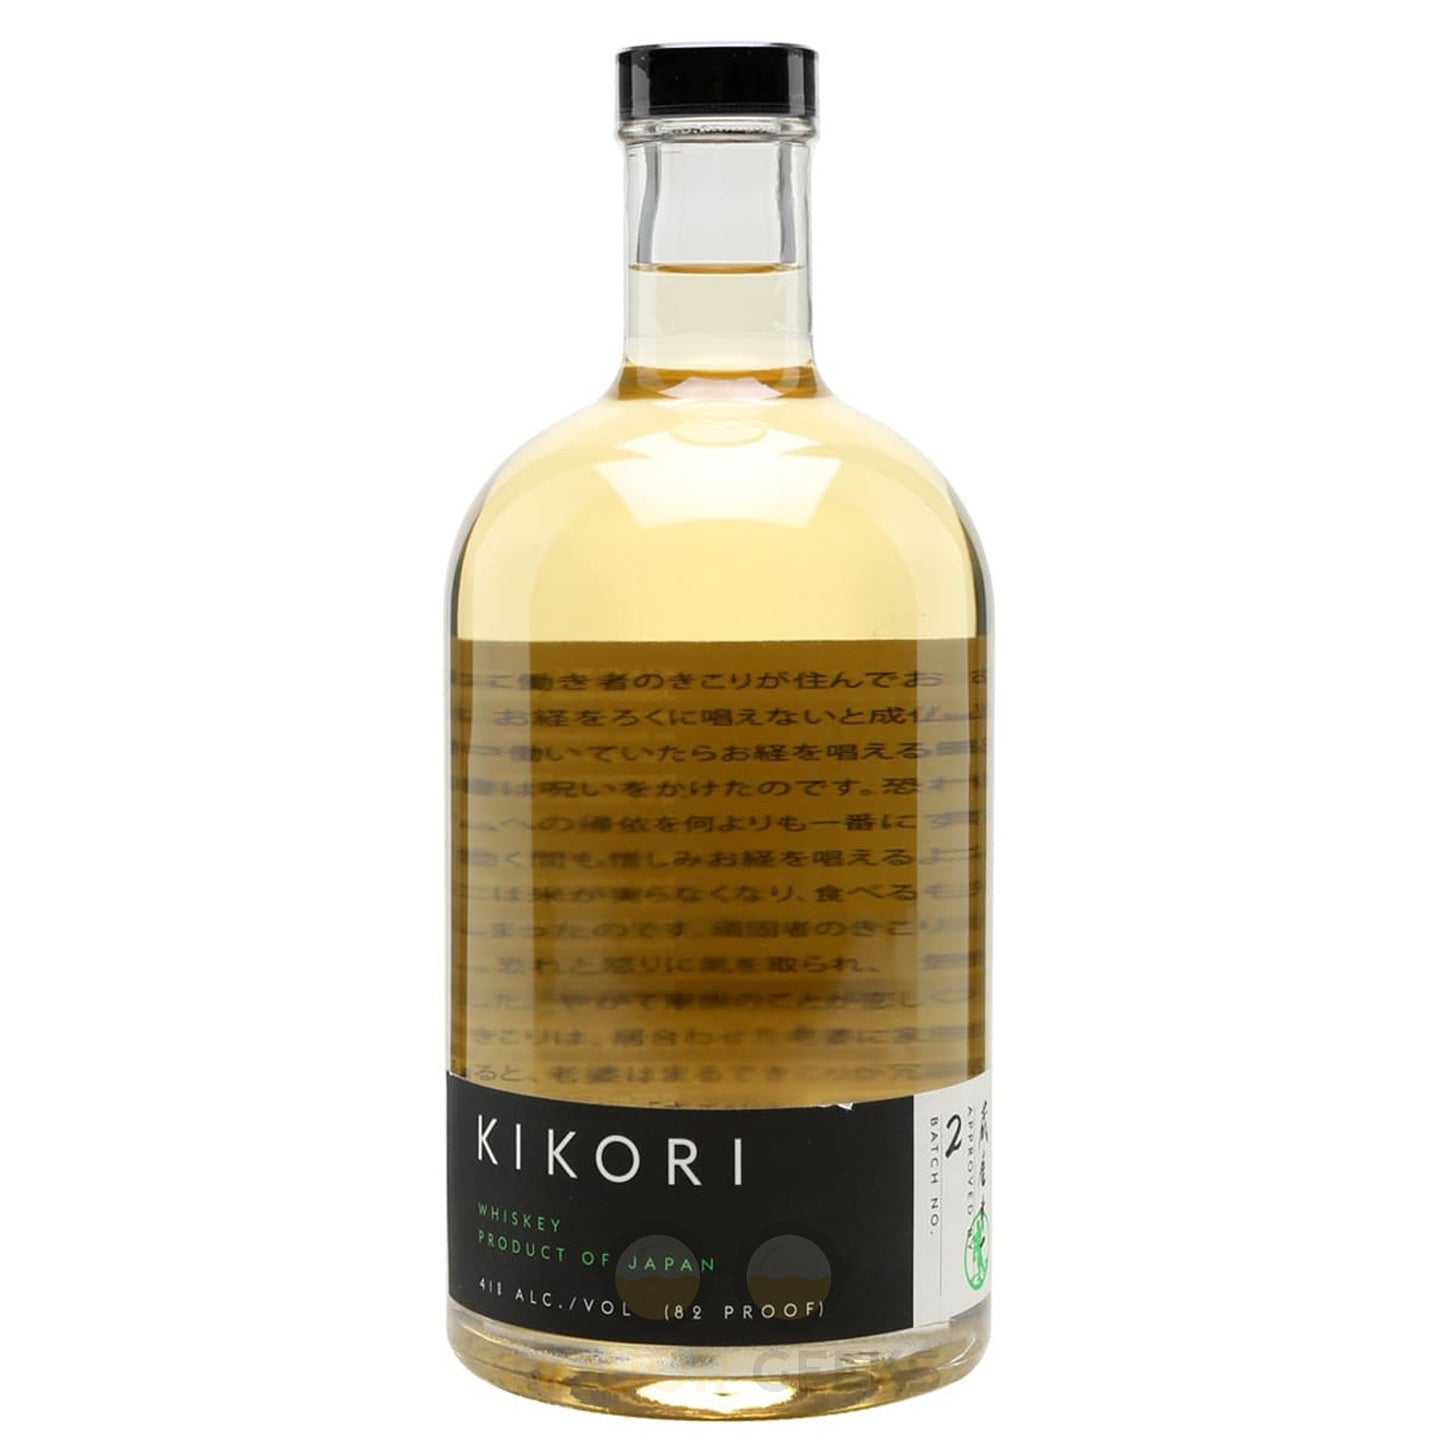 Kikori Japanese Whisky - Liquor Geeks